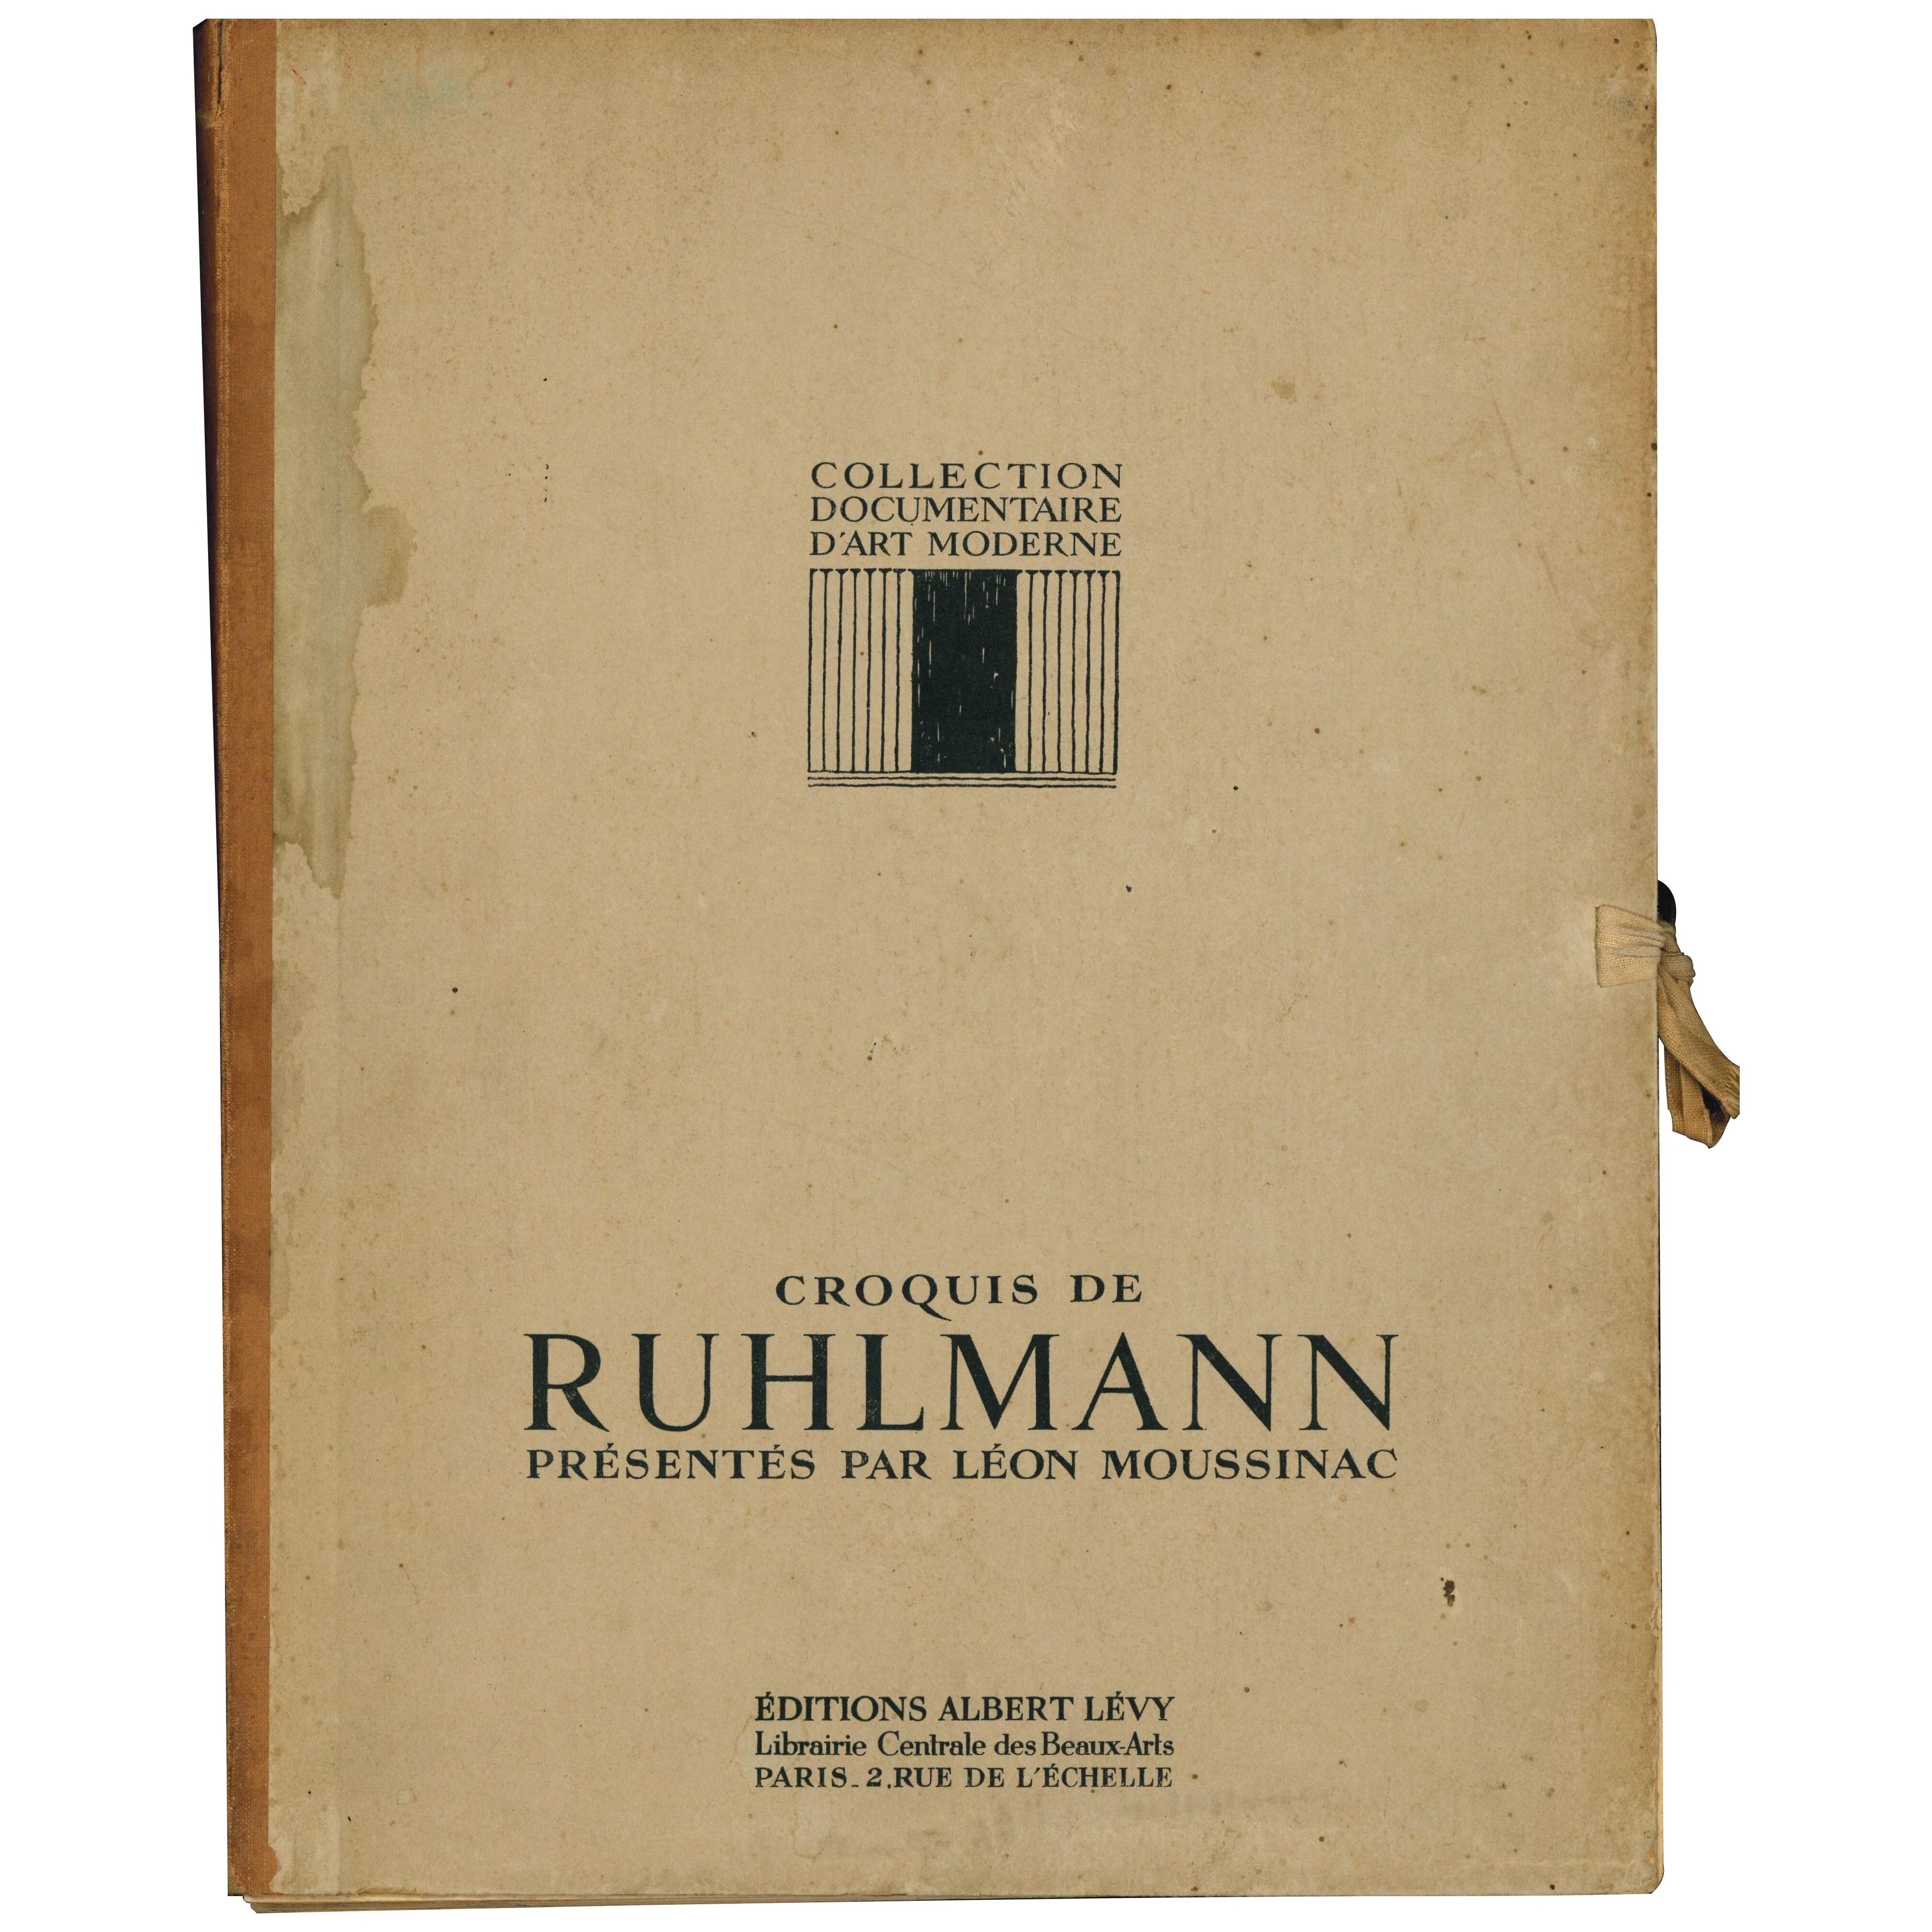 CROQUIS DE RUHLMANN by Leon Moussinac. Book